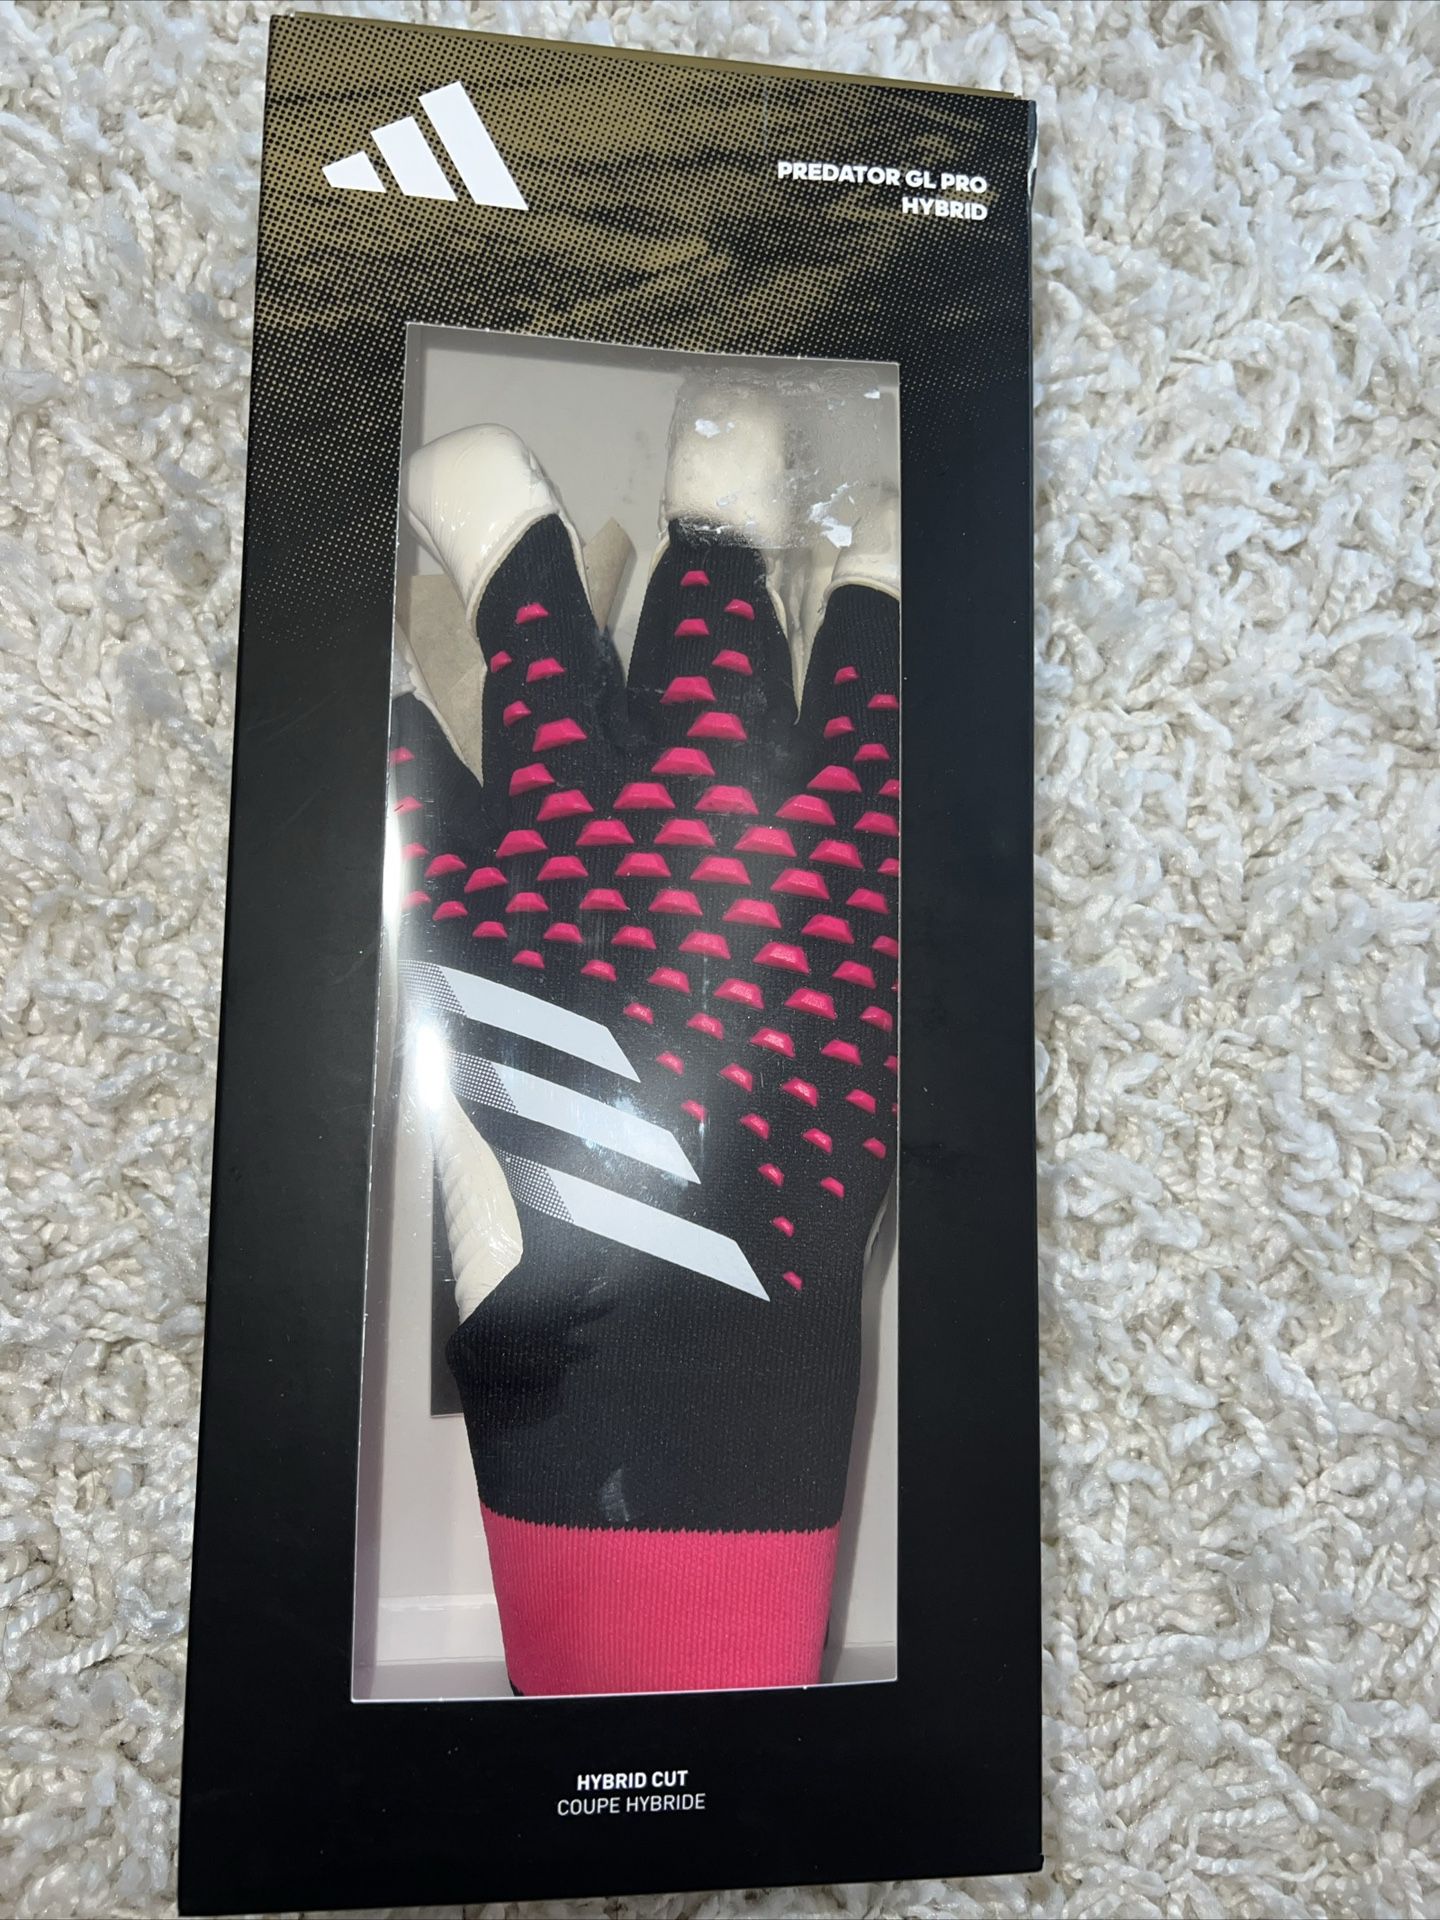 New Size 8 Adidas Predator GL Pro Hybrid Cut Goal Keeper Gloves Rare Pink HN3341